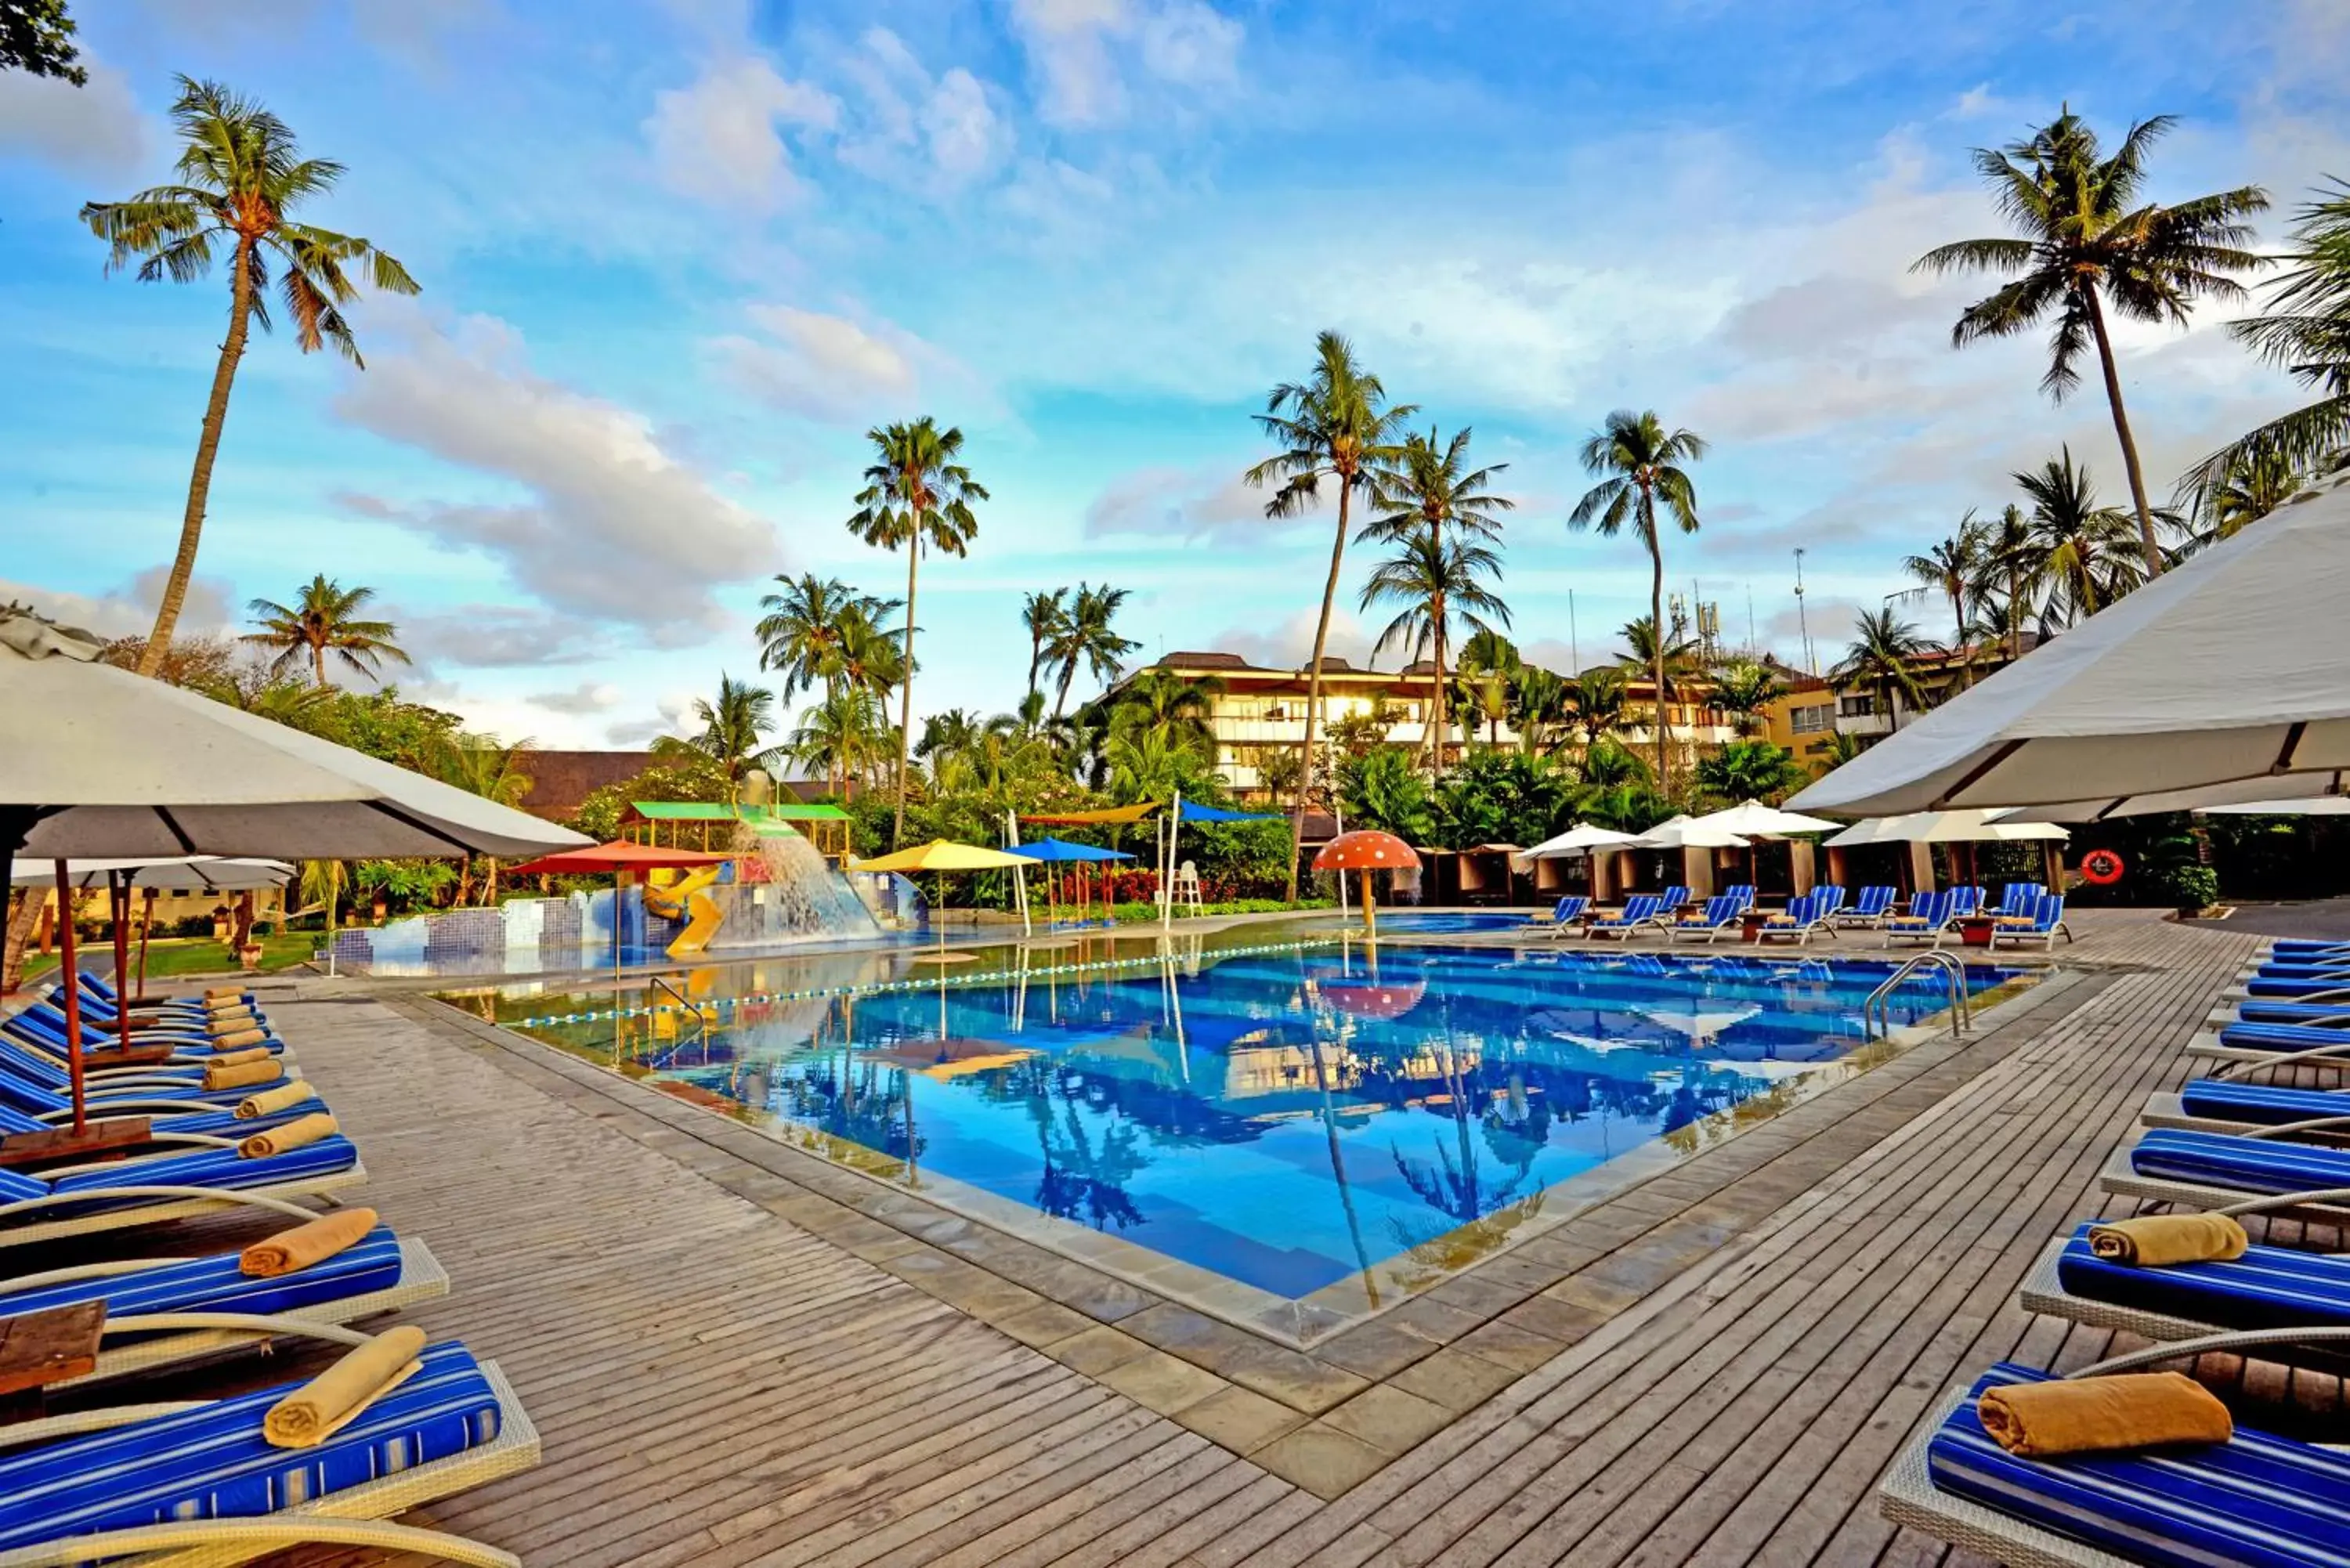 Swimming Pool in Prama Sanur Beach Bali